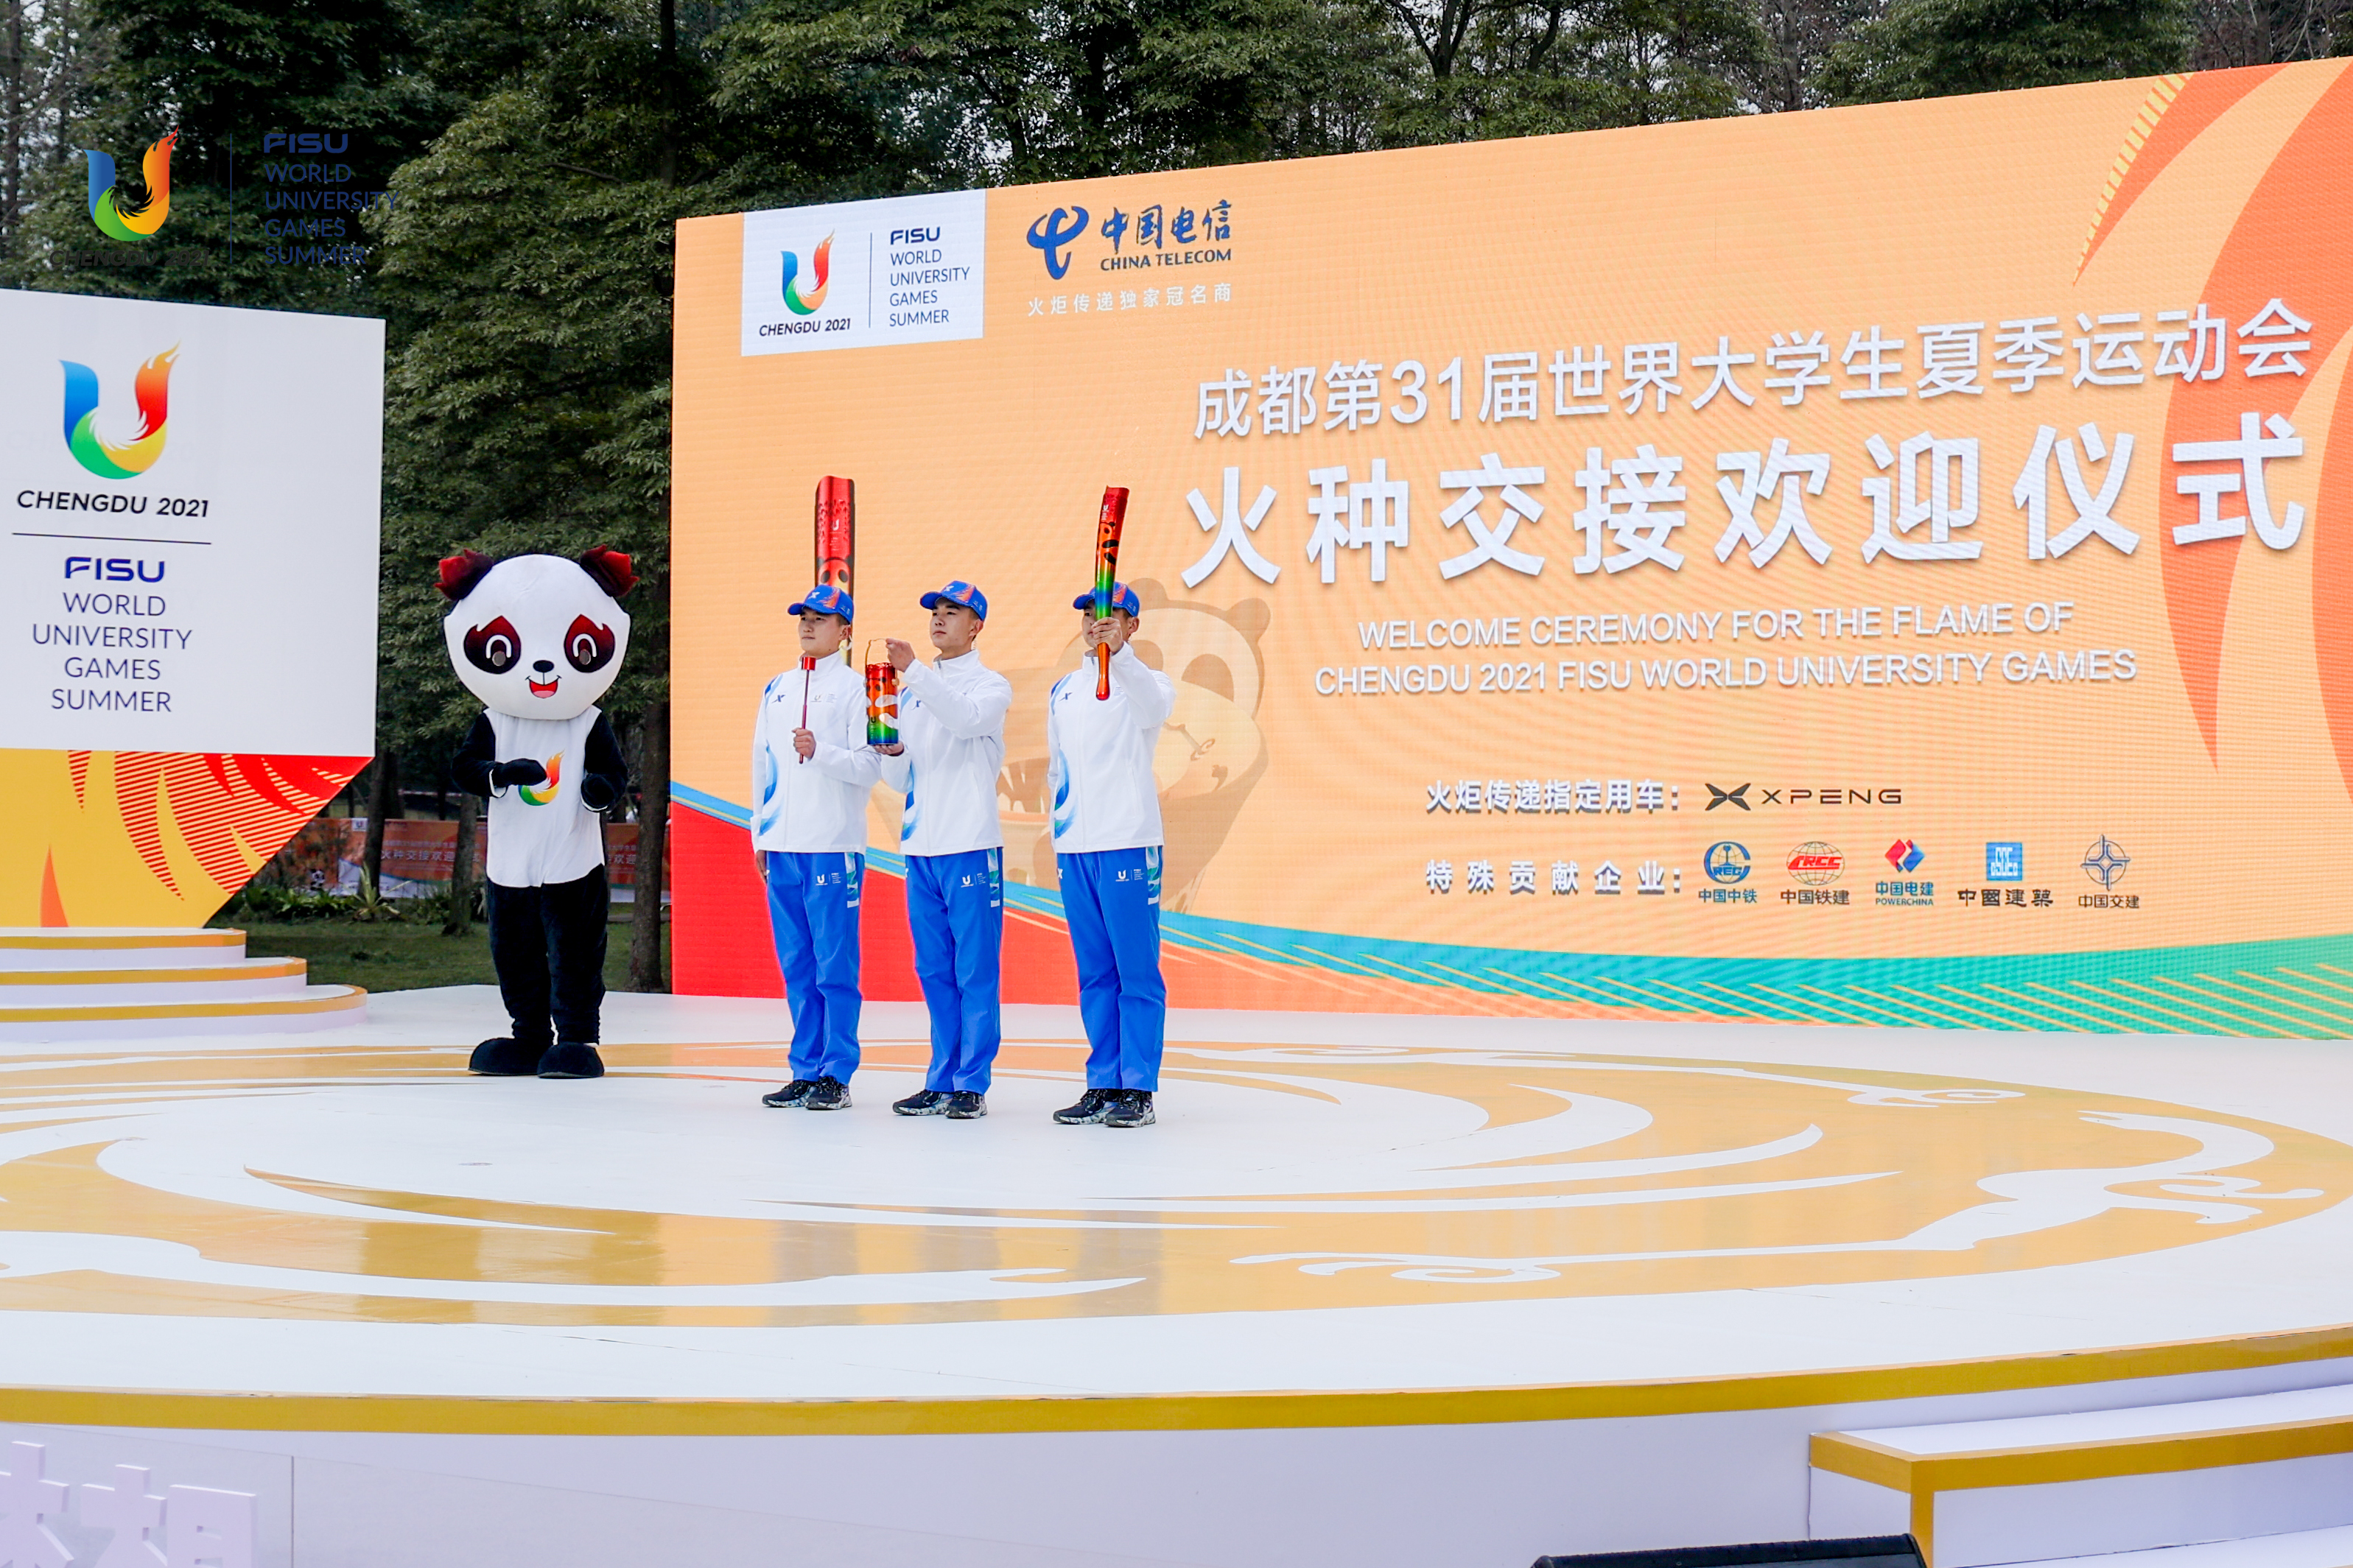 FISU flame handover ceremony held in Chengdu